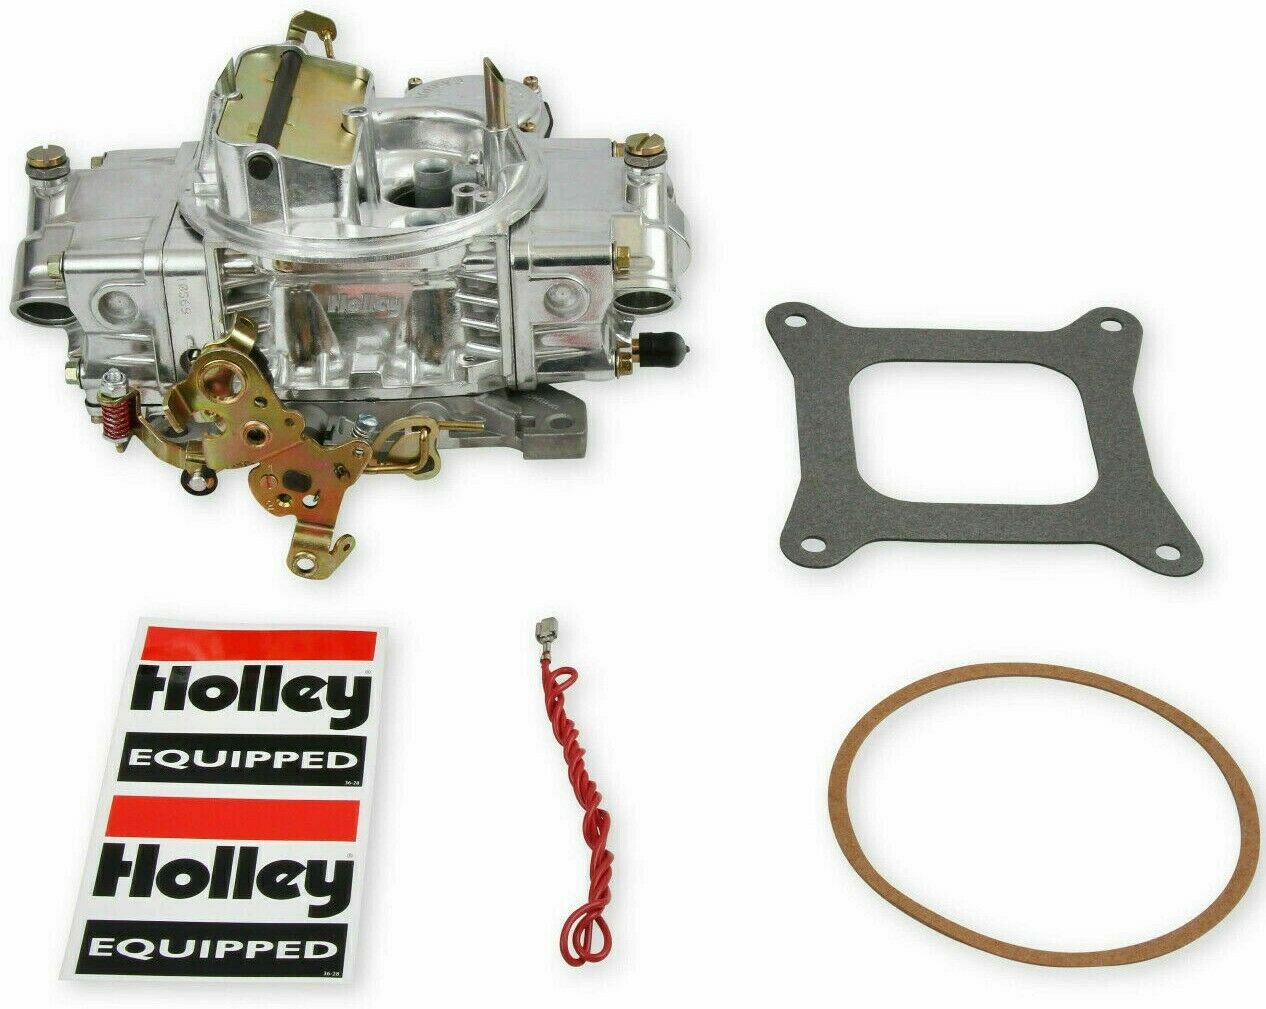 Holley 0-80508S Model 4160 750 CFM Square Bore Vacuum Secondary Electric Choke Replacement Carburetor - 3